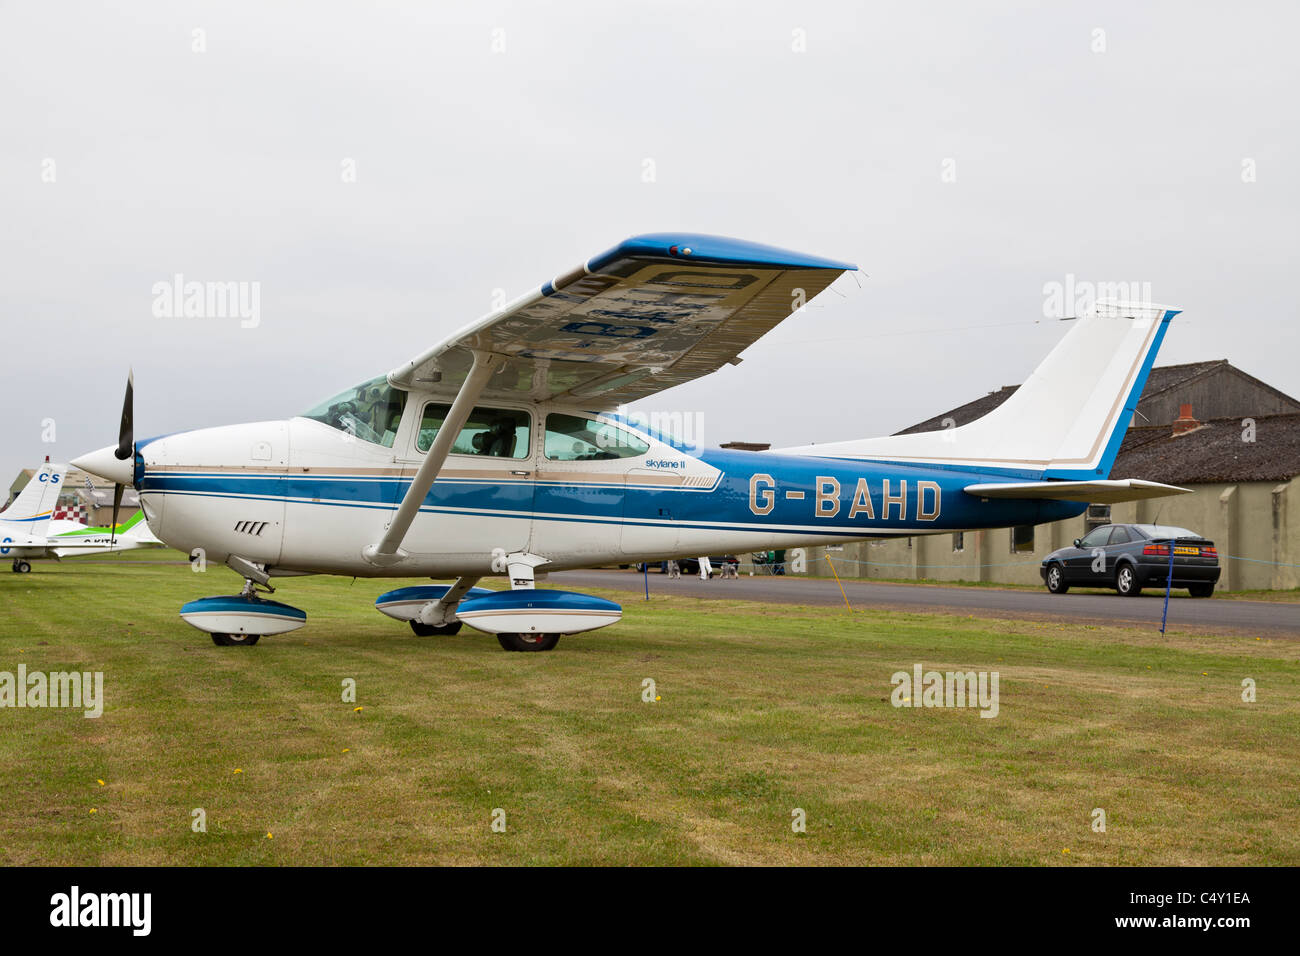 Cessna 182 Skylane, reg. G-BAHD, at Breighton Stock Photo